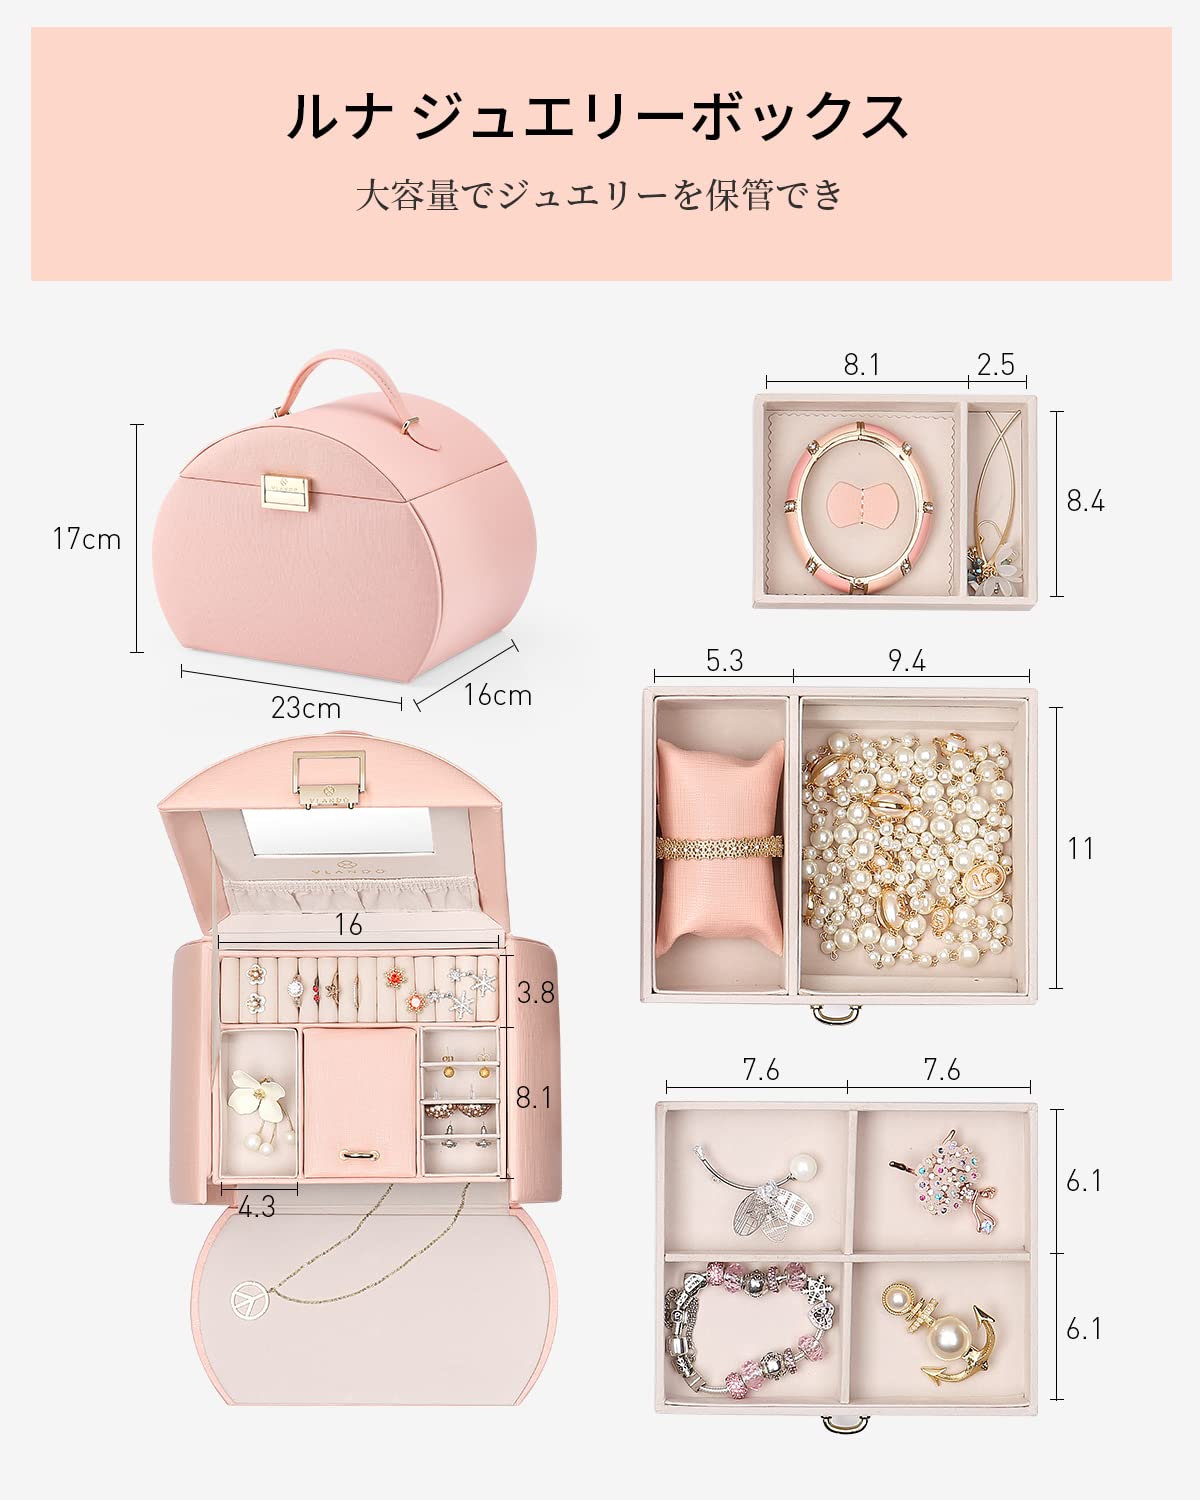 Vlando Princess Style Jewelry Box from Netherlands Design Team, Fabulous Girls Gift (Pink)